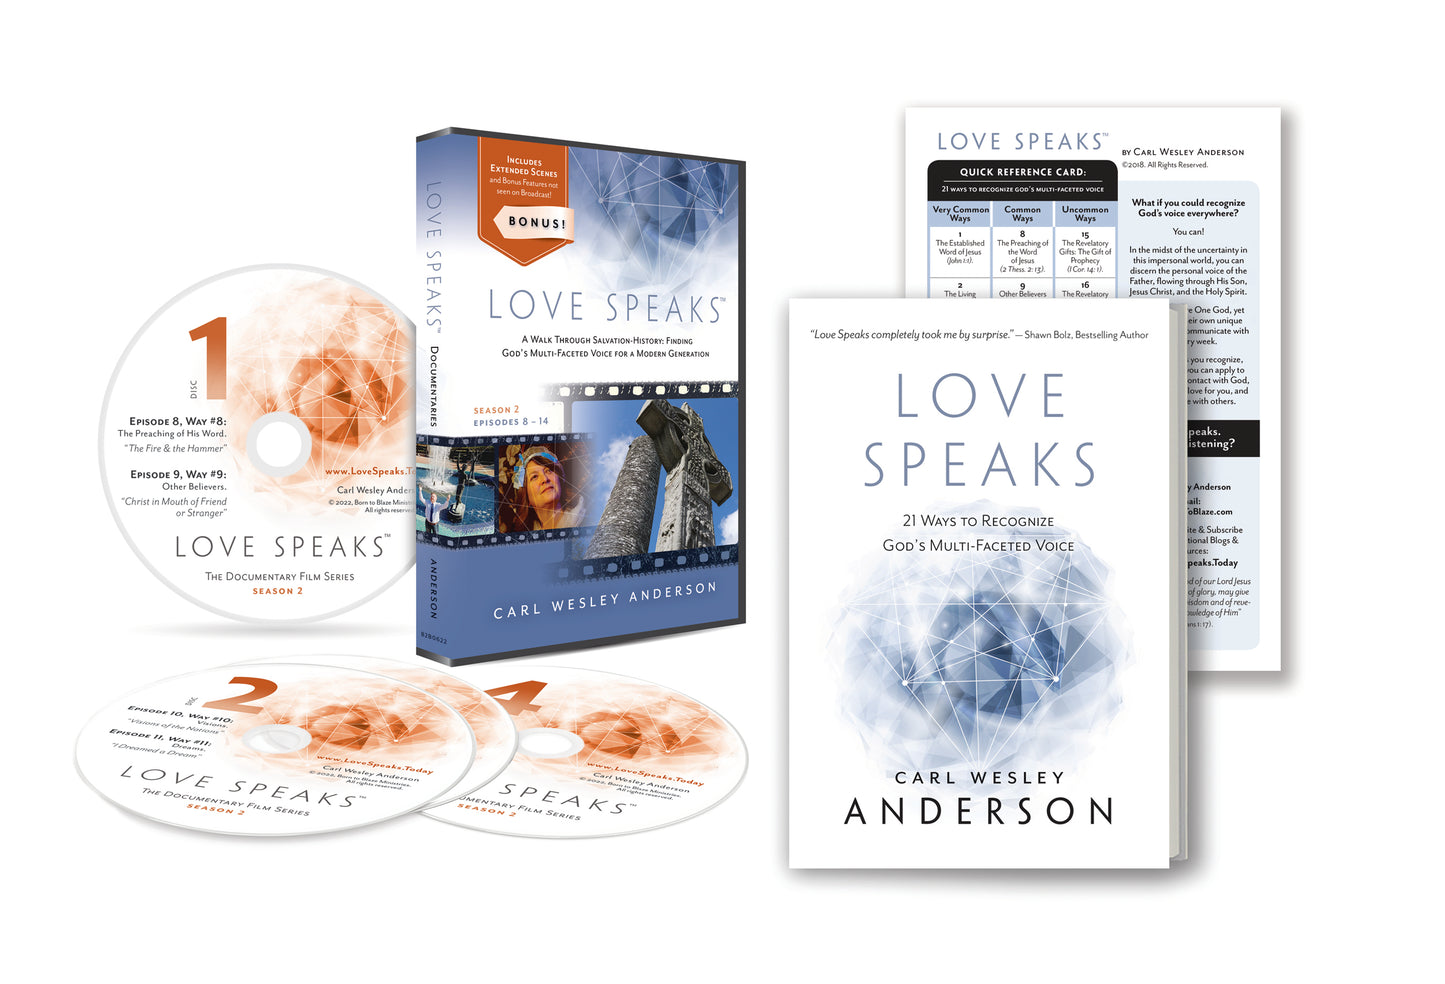 LOVE SPEAKS DVD & PAPERBACK BOOK BUNDLE